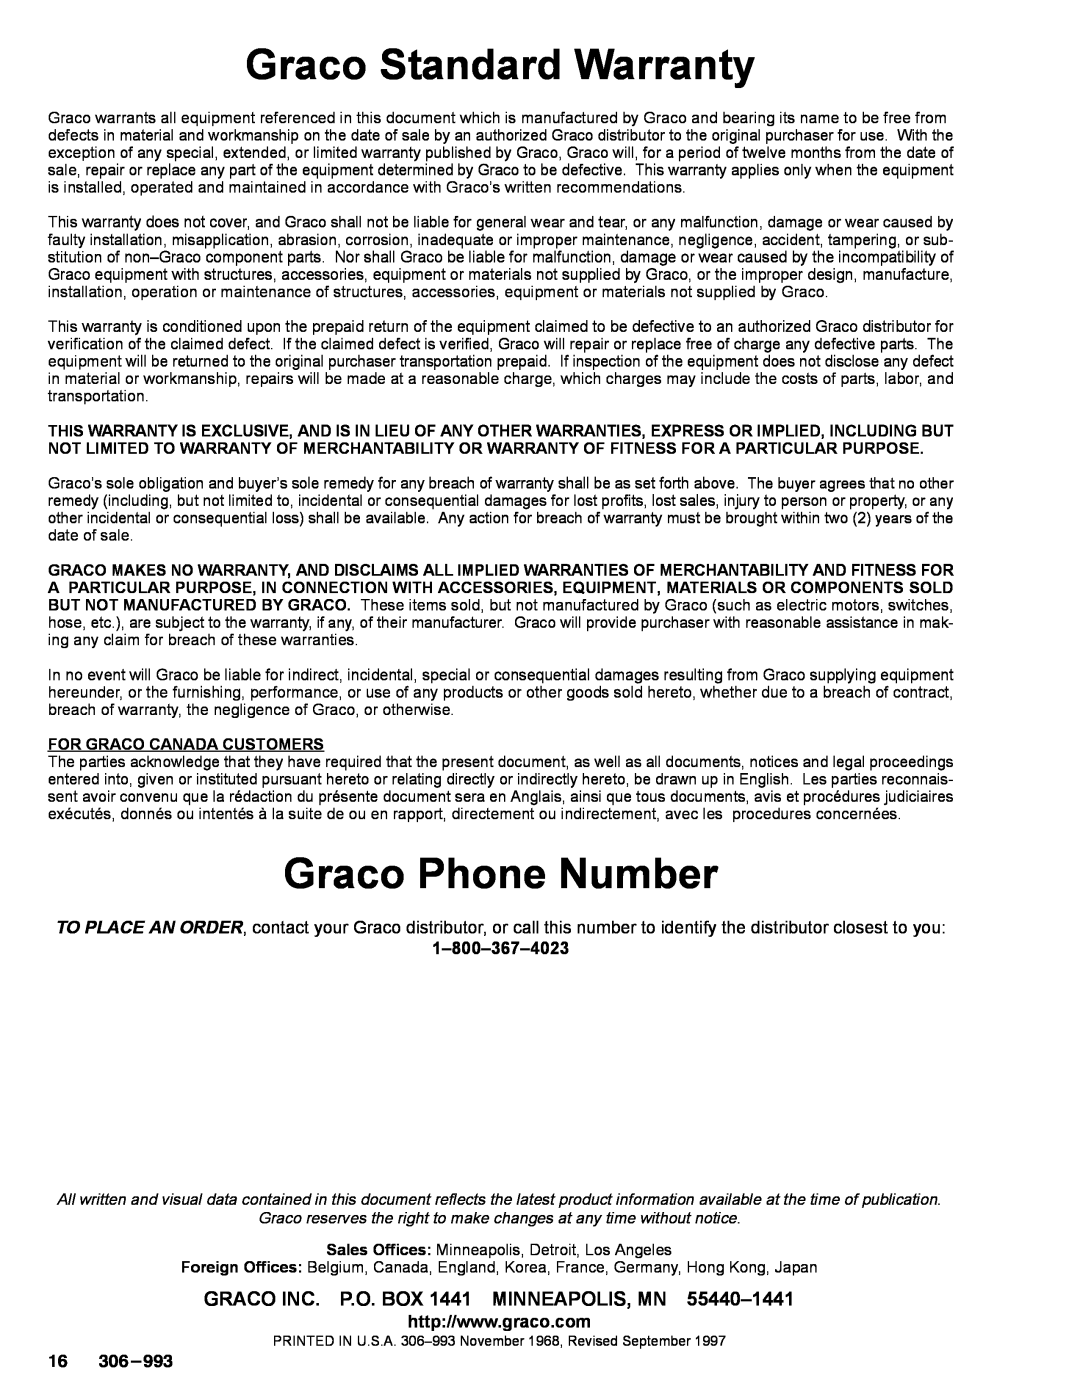 Graco Inc 207-860, 306-993, 205-985 Graco Standard Warranty, Graco Phone Number, GRACO INC. P.O. BOX 1441 MINNEAPOLIS, MN 